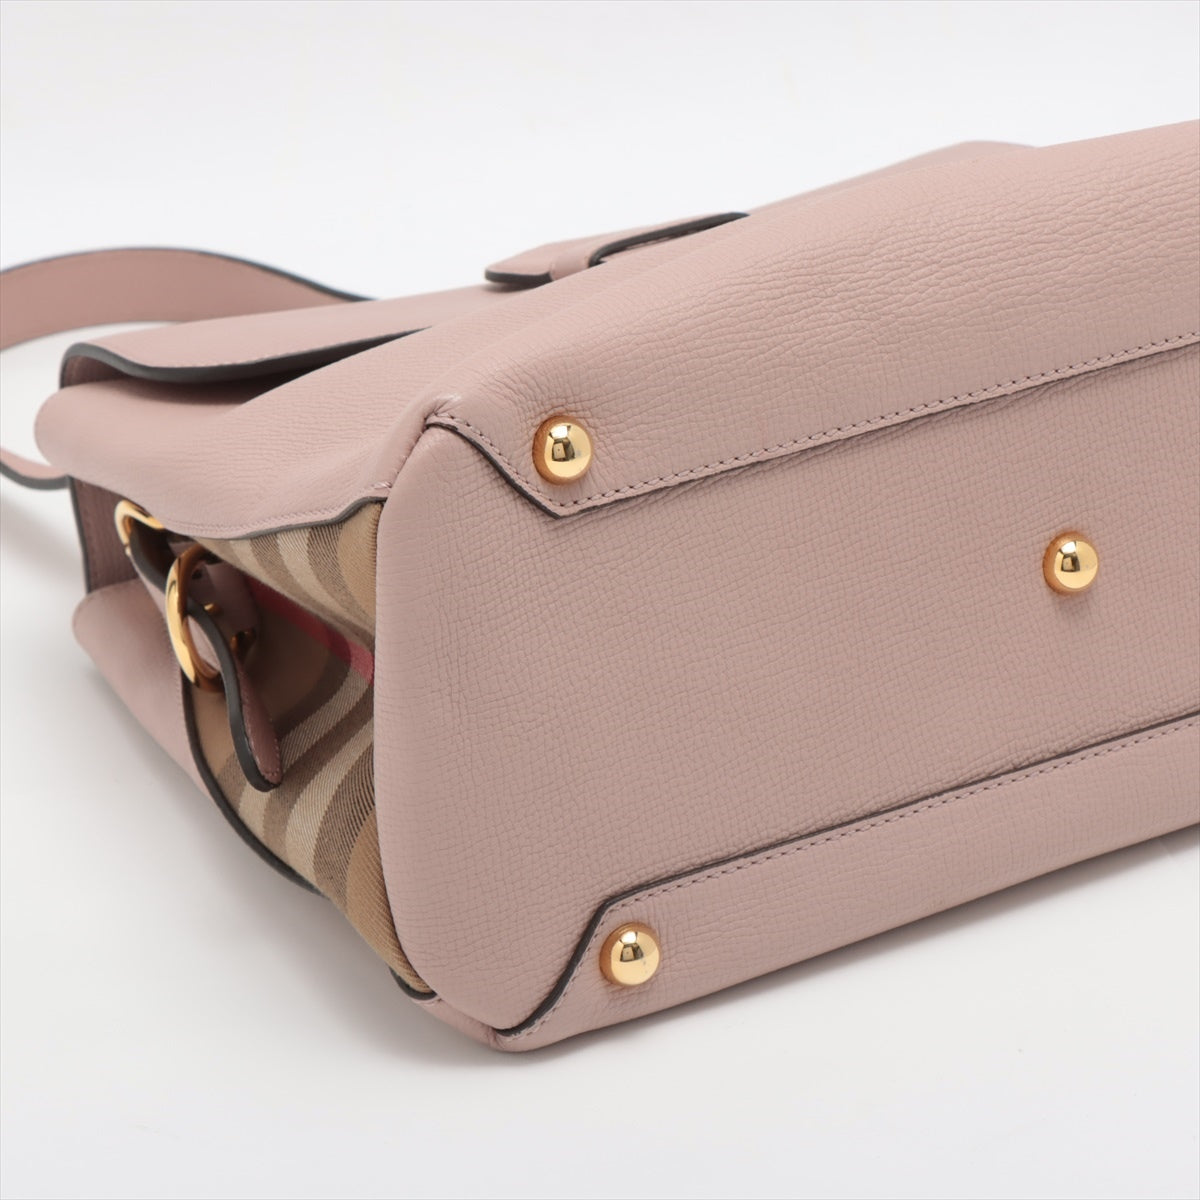 Burberry Canvas & leather 2way shoulder bag Pink